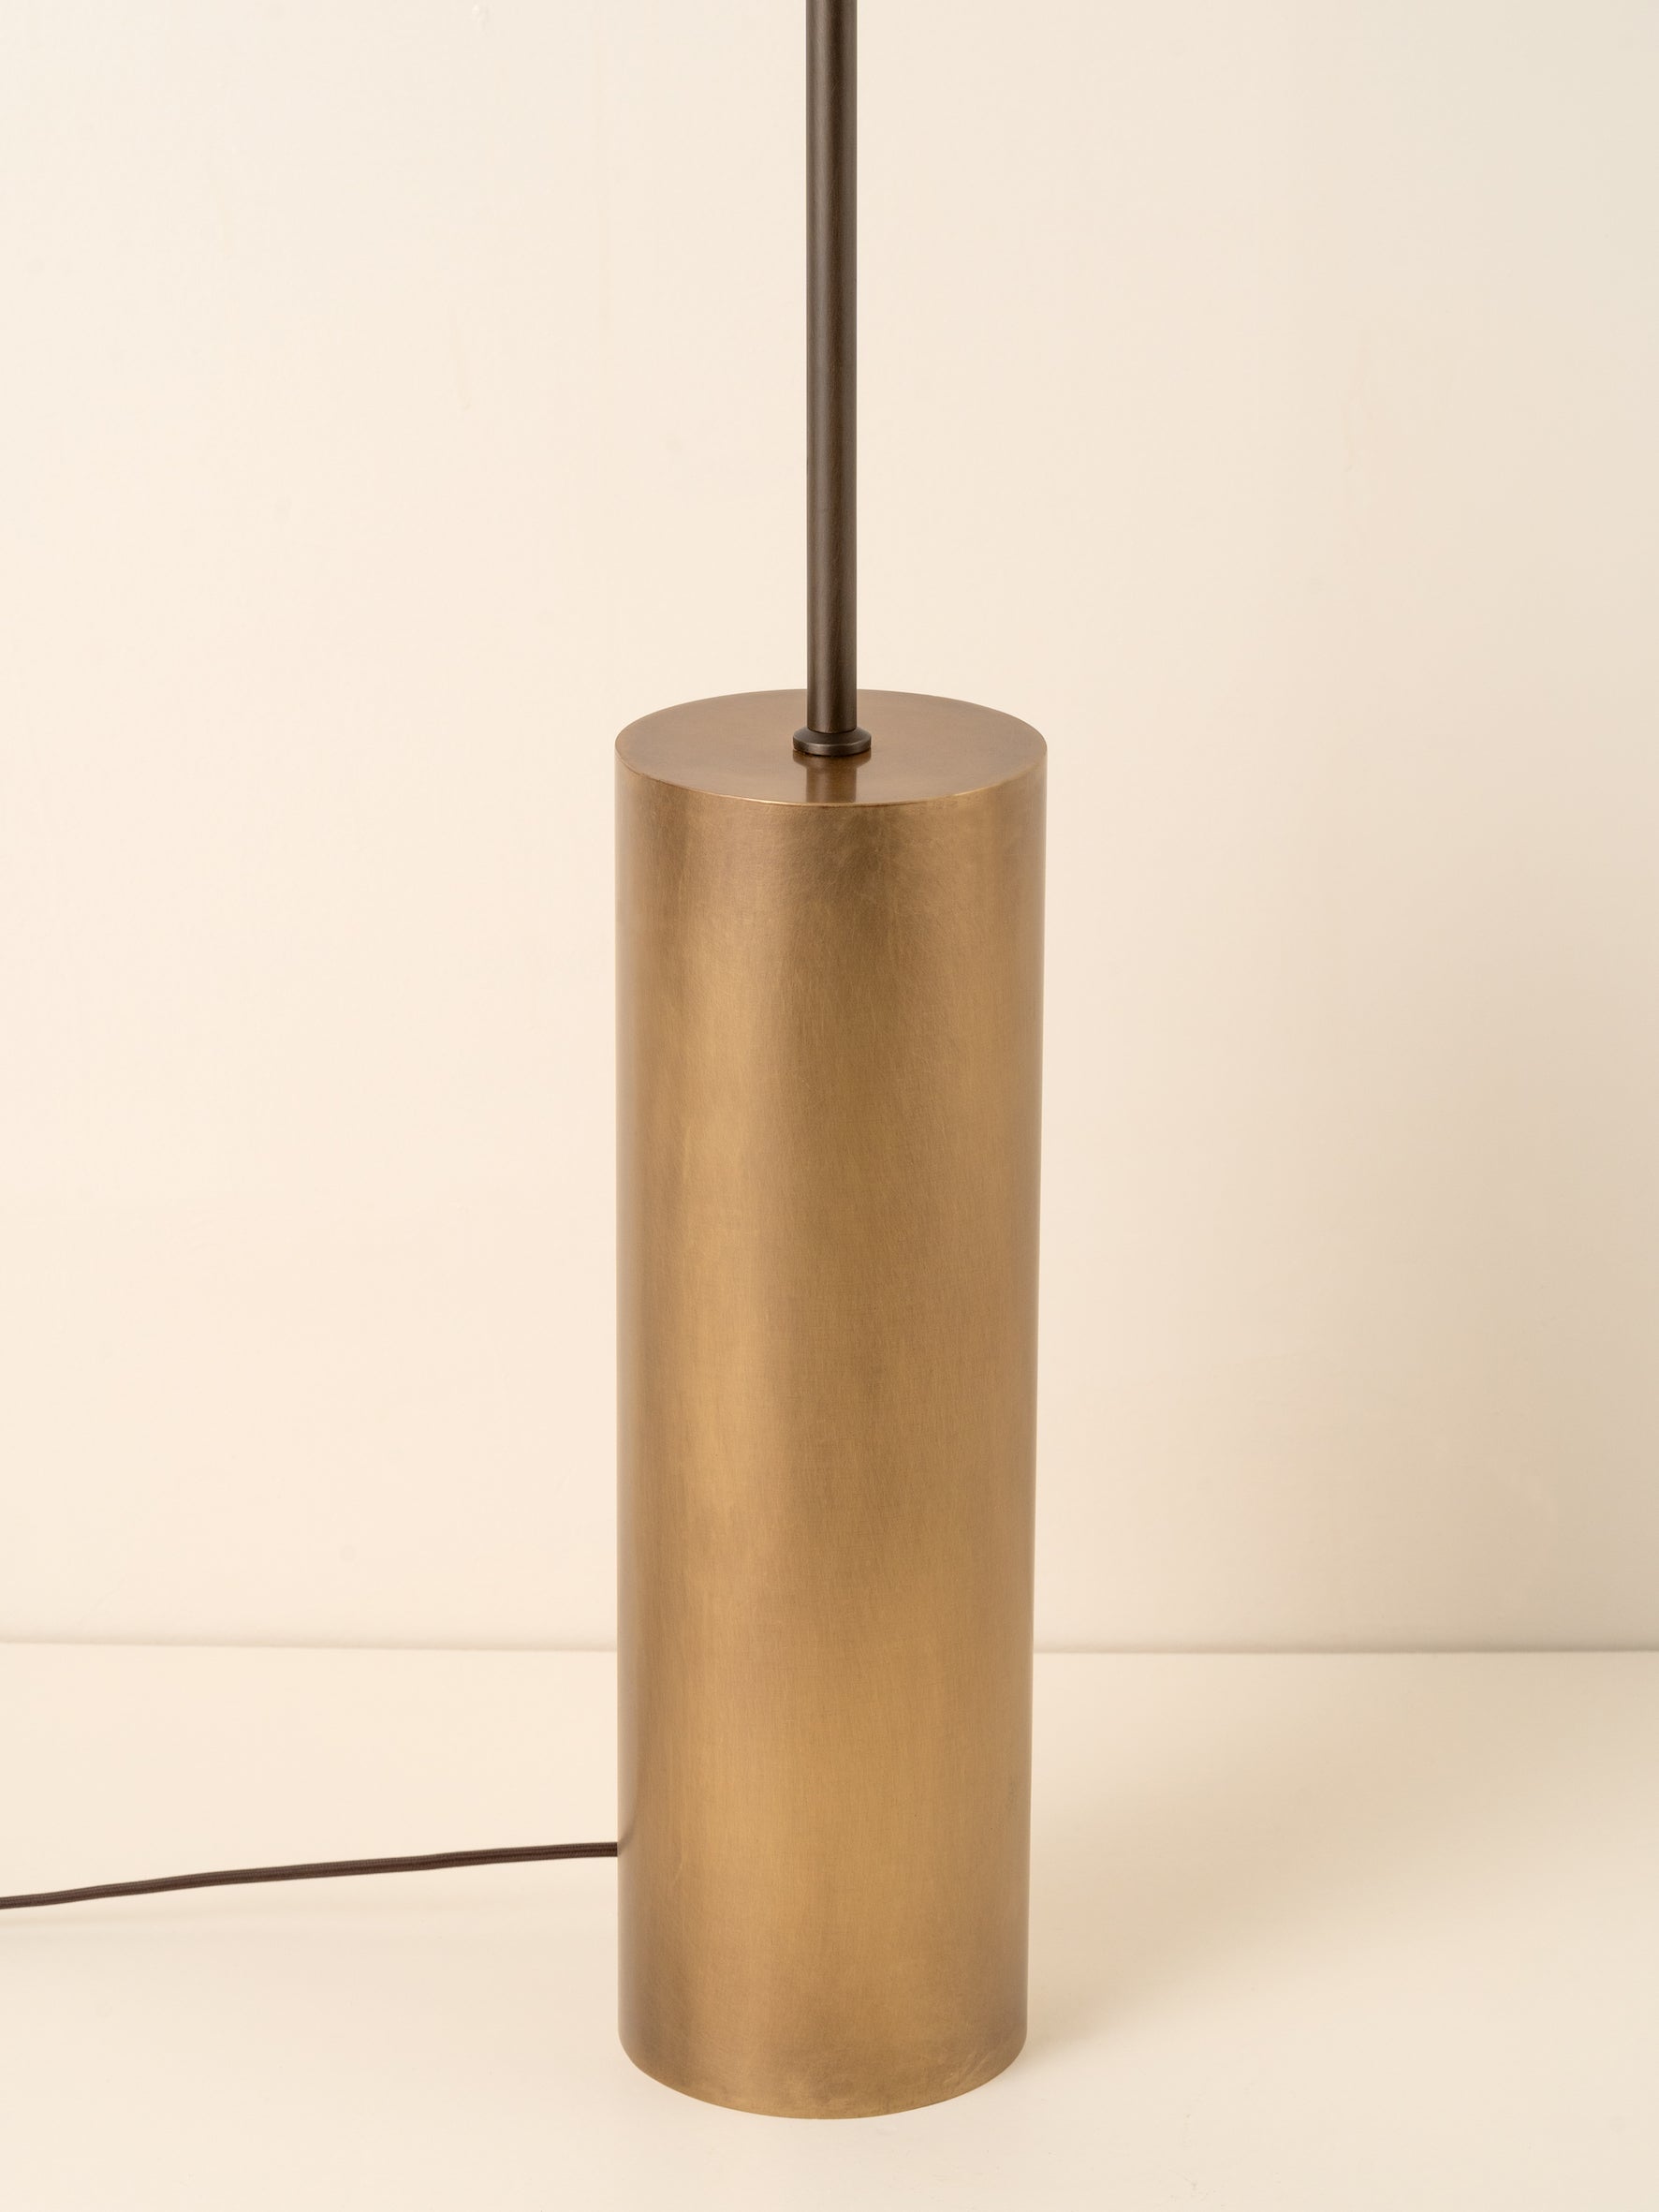 Solara - aged brass and layered natural linen floor lamp | Floor Lamp | Lights & Lamps | UK | Modern Affordable Designer Lighting